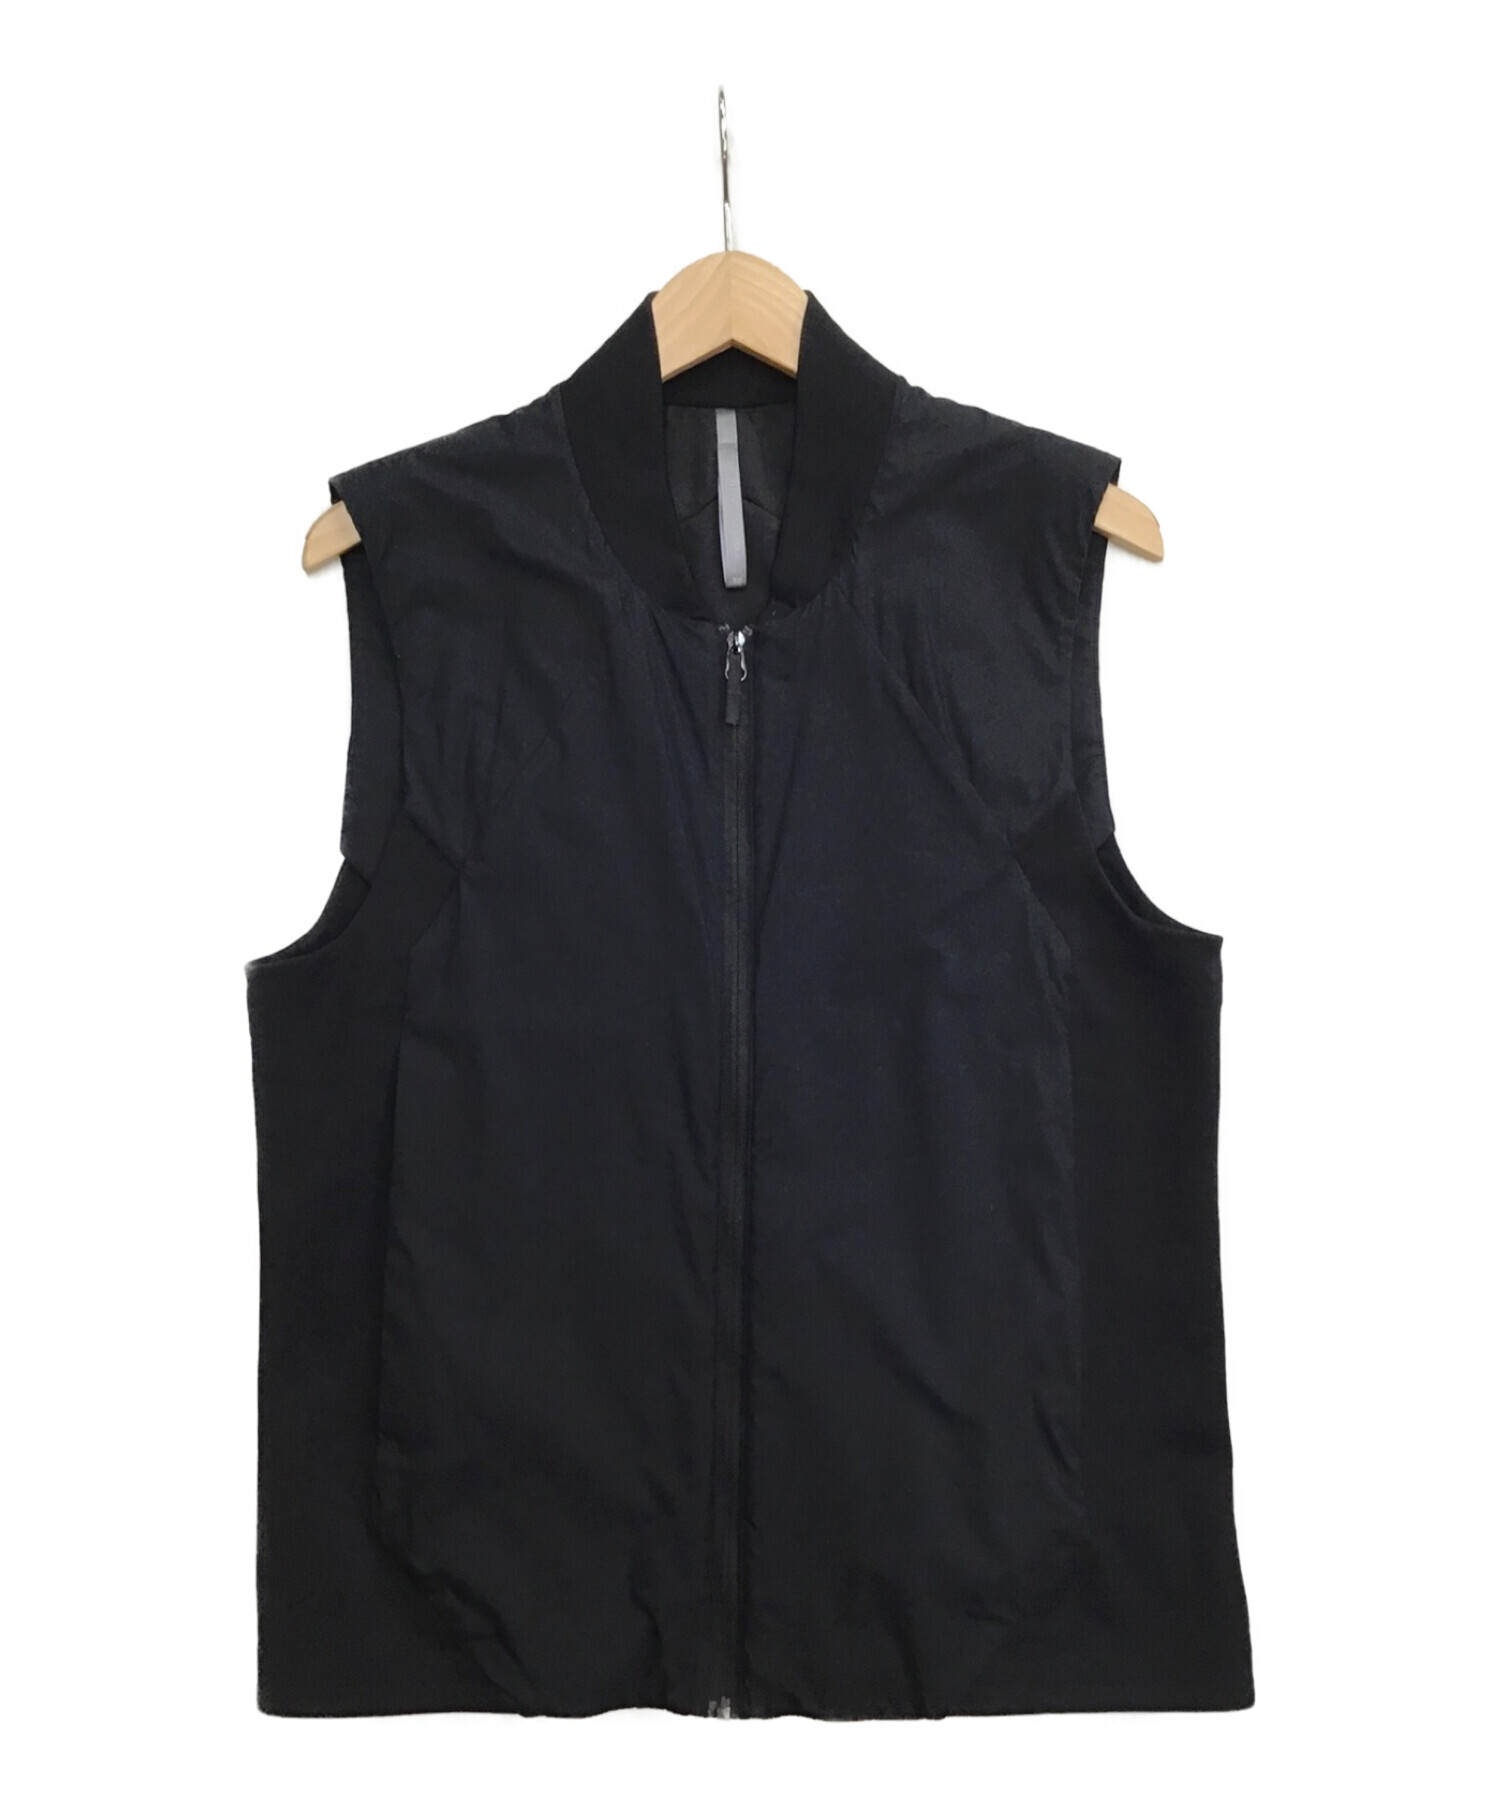 ARC'TERYX VEILANCE (アークテリクス ヴェイランス) Quoin Vest ブラック サイズ:S